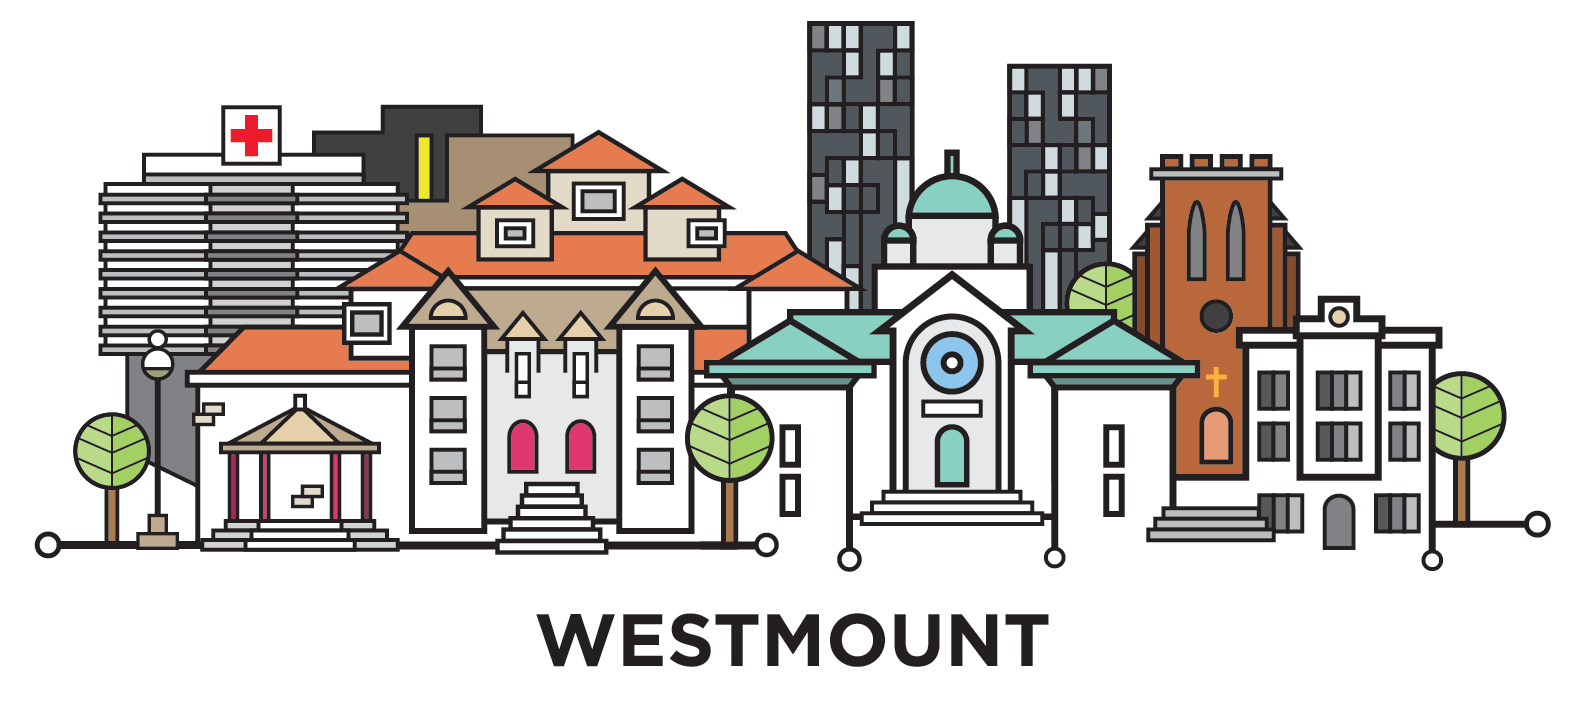 mtl-westmount-cityline-illustration-by-loogart